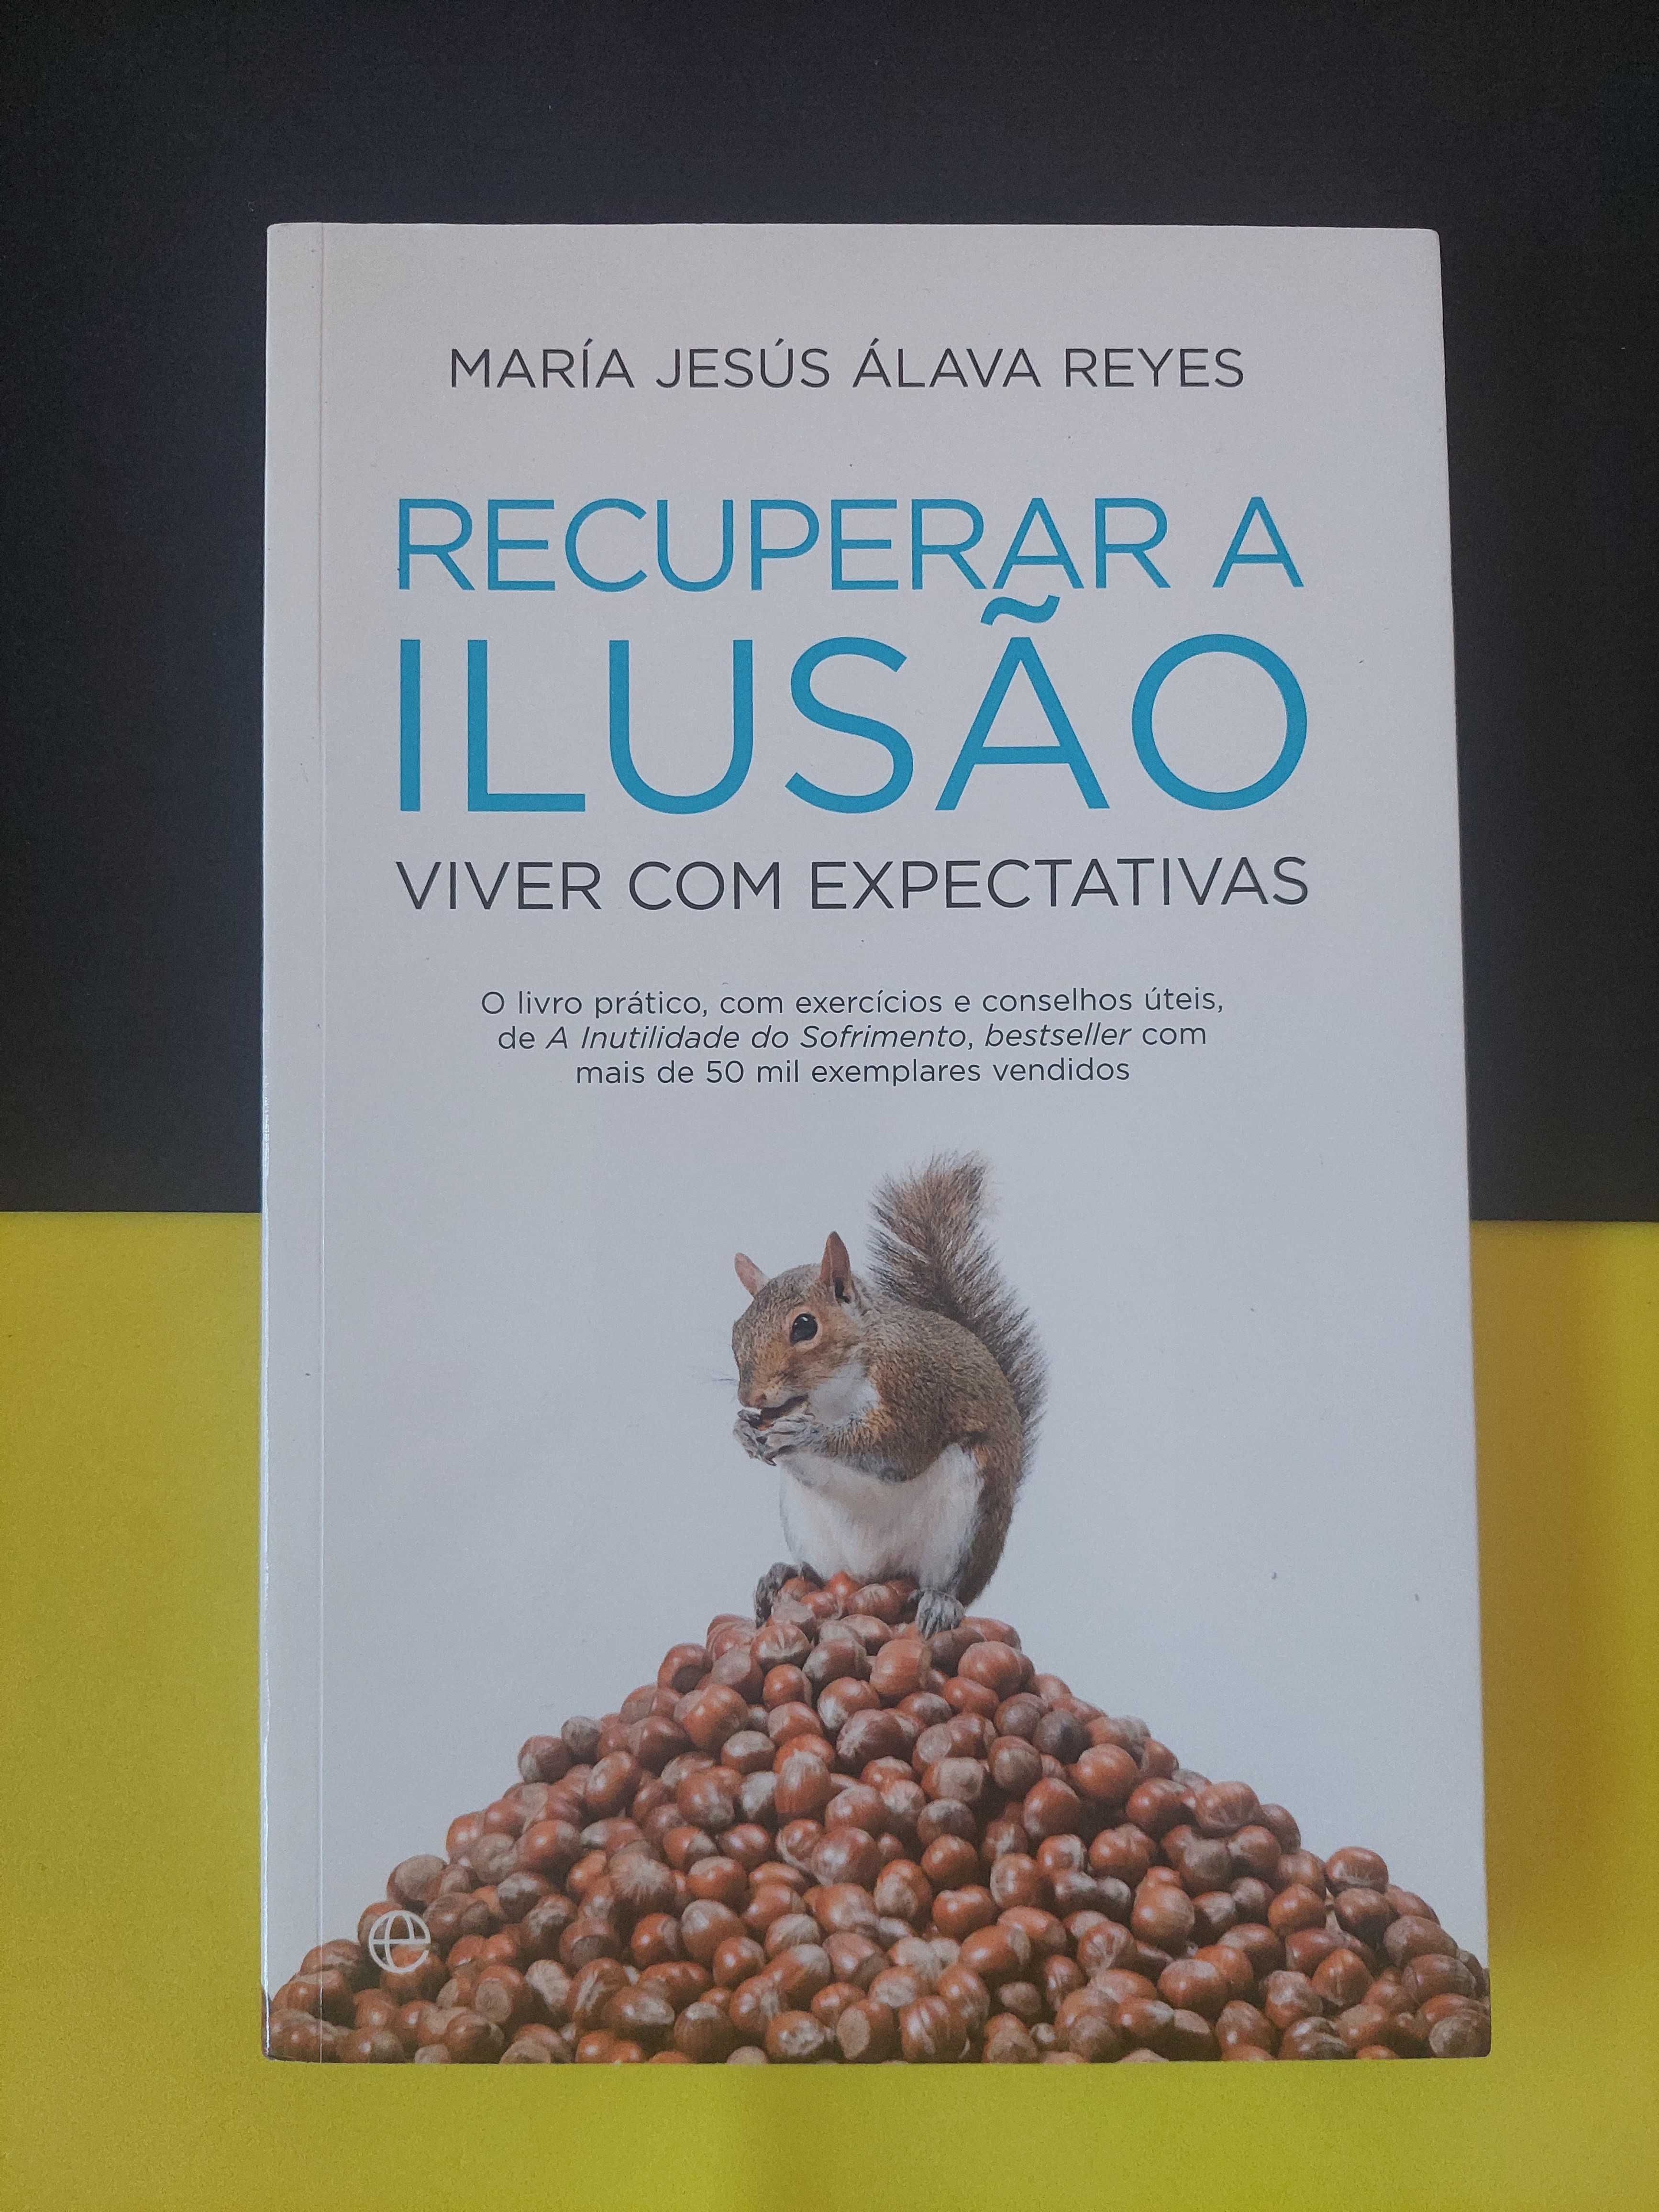 Mará J. A. Reyes - Recuperar a Ilusão